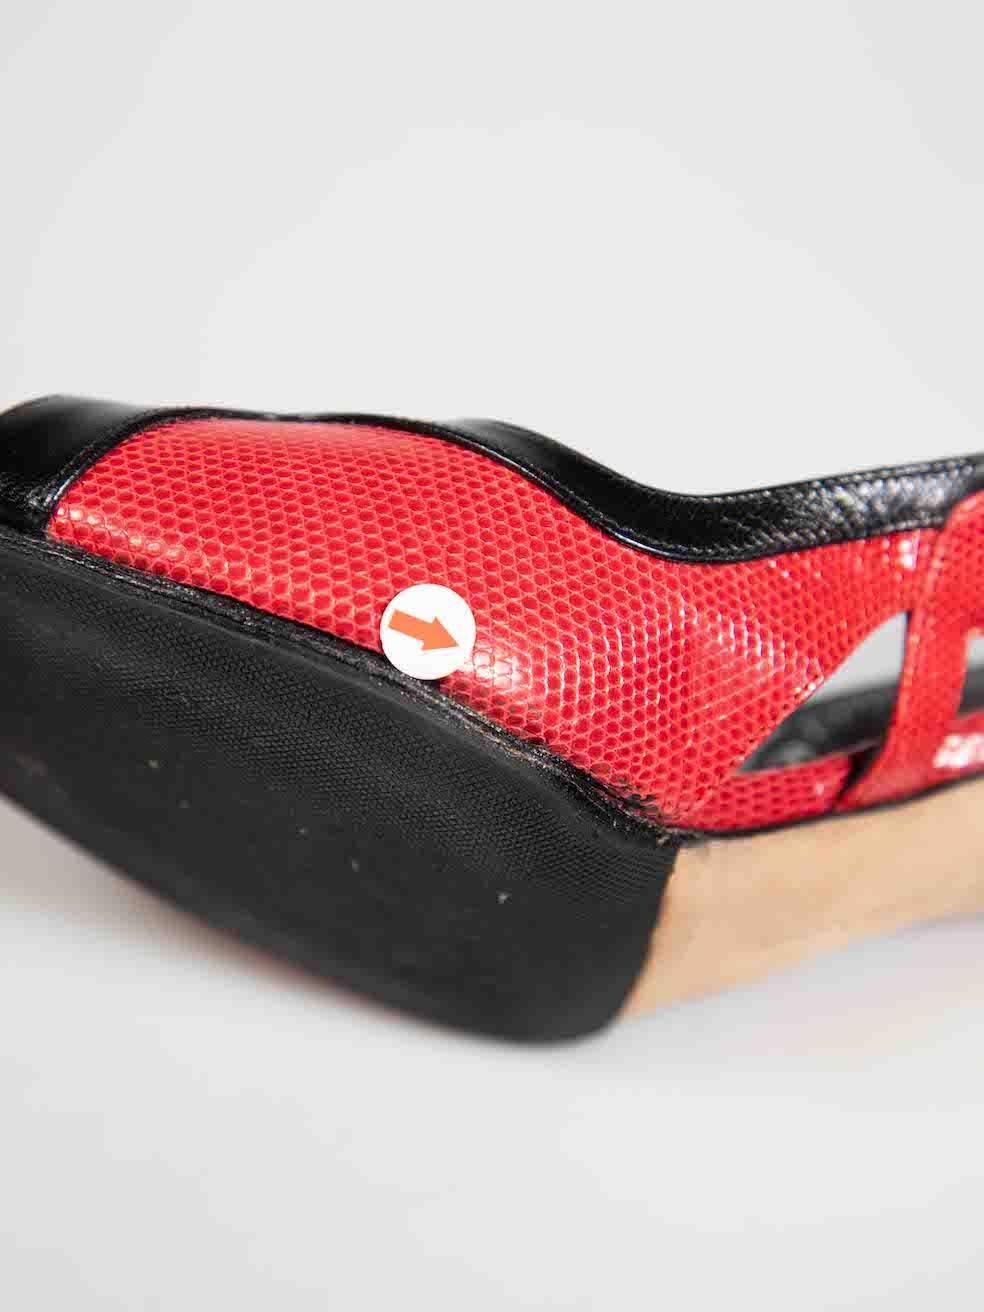 Manolo Blahnik Red & Black Leather Slingback Sandals Size IT 38 For Sale 2